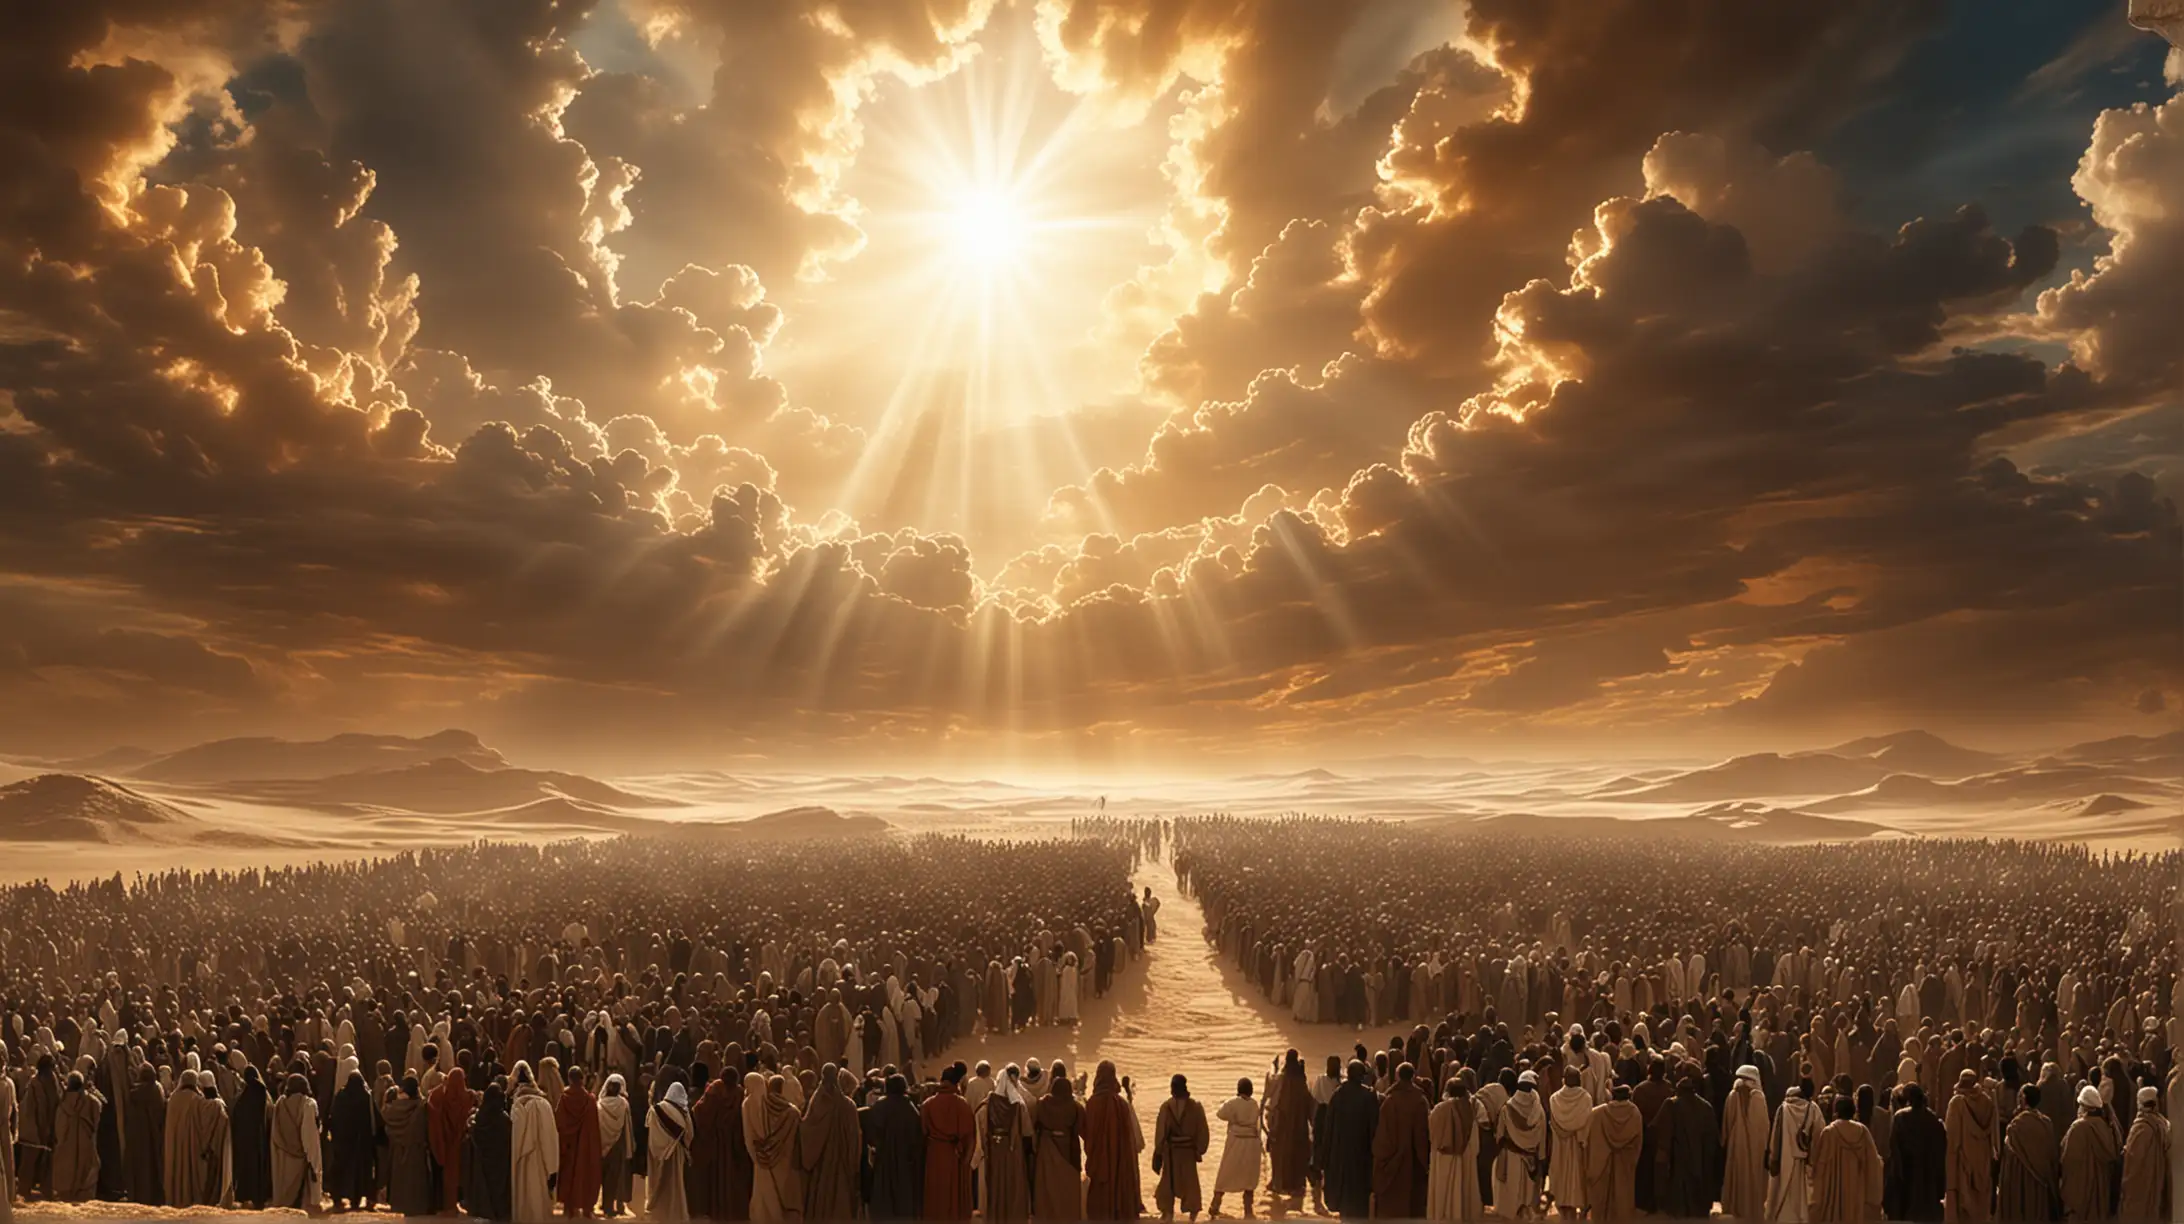 Biblical Era Crowd Gathered around Moses in Desert Setting